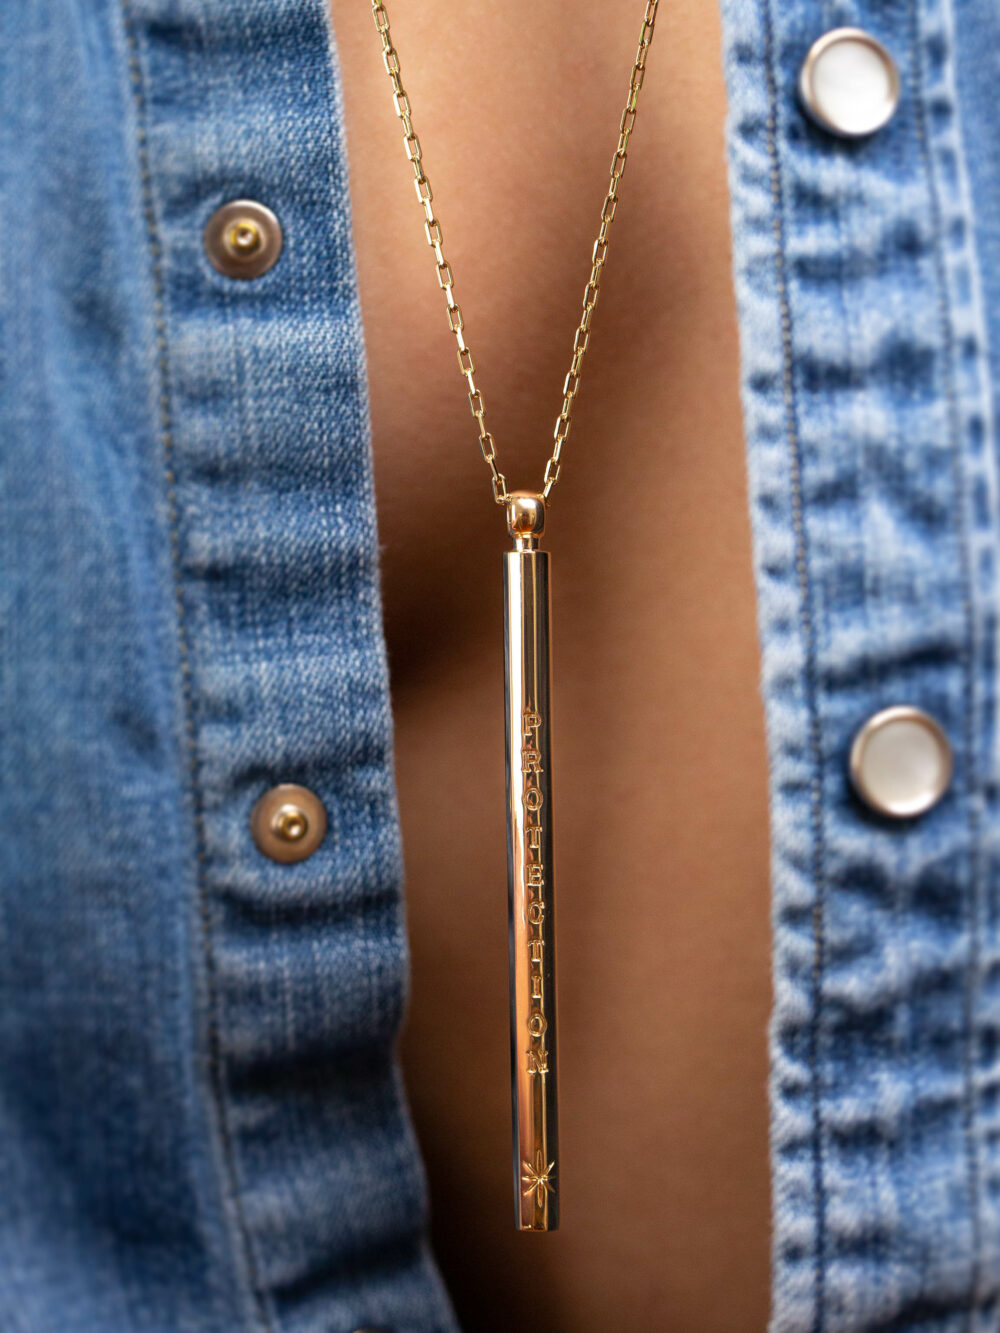 protection-totem-long-necklace-luj-paris-jewel